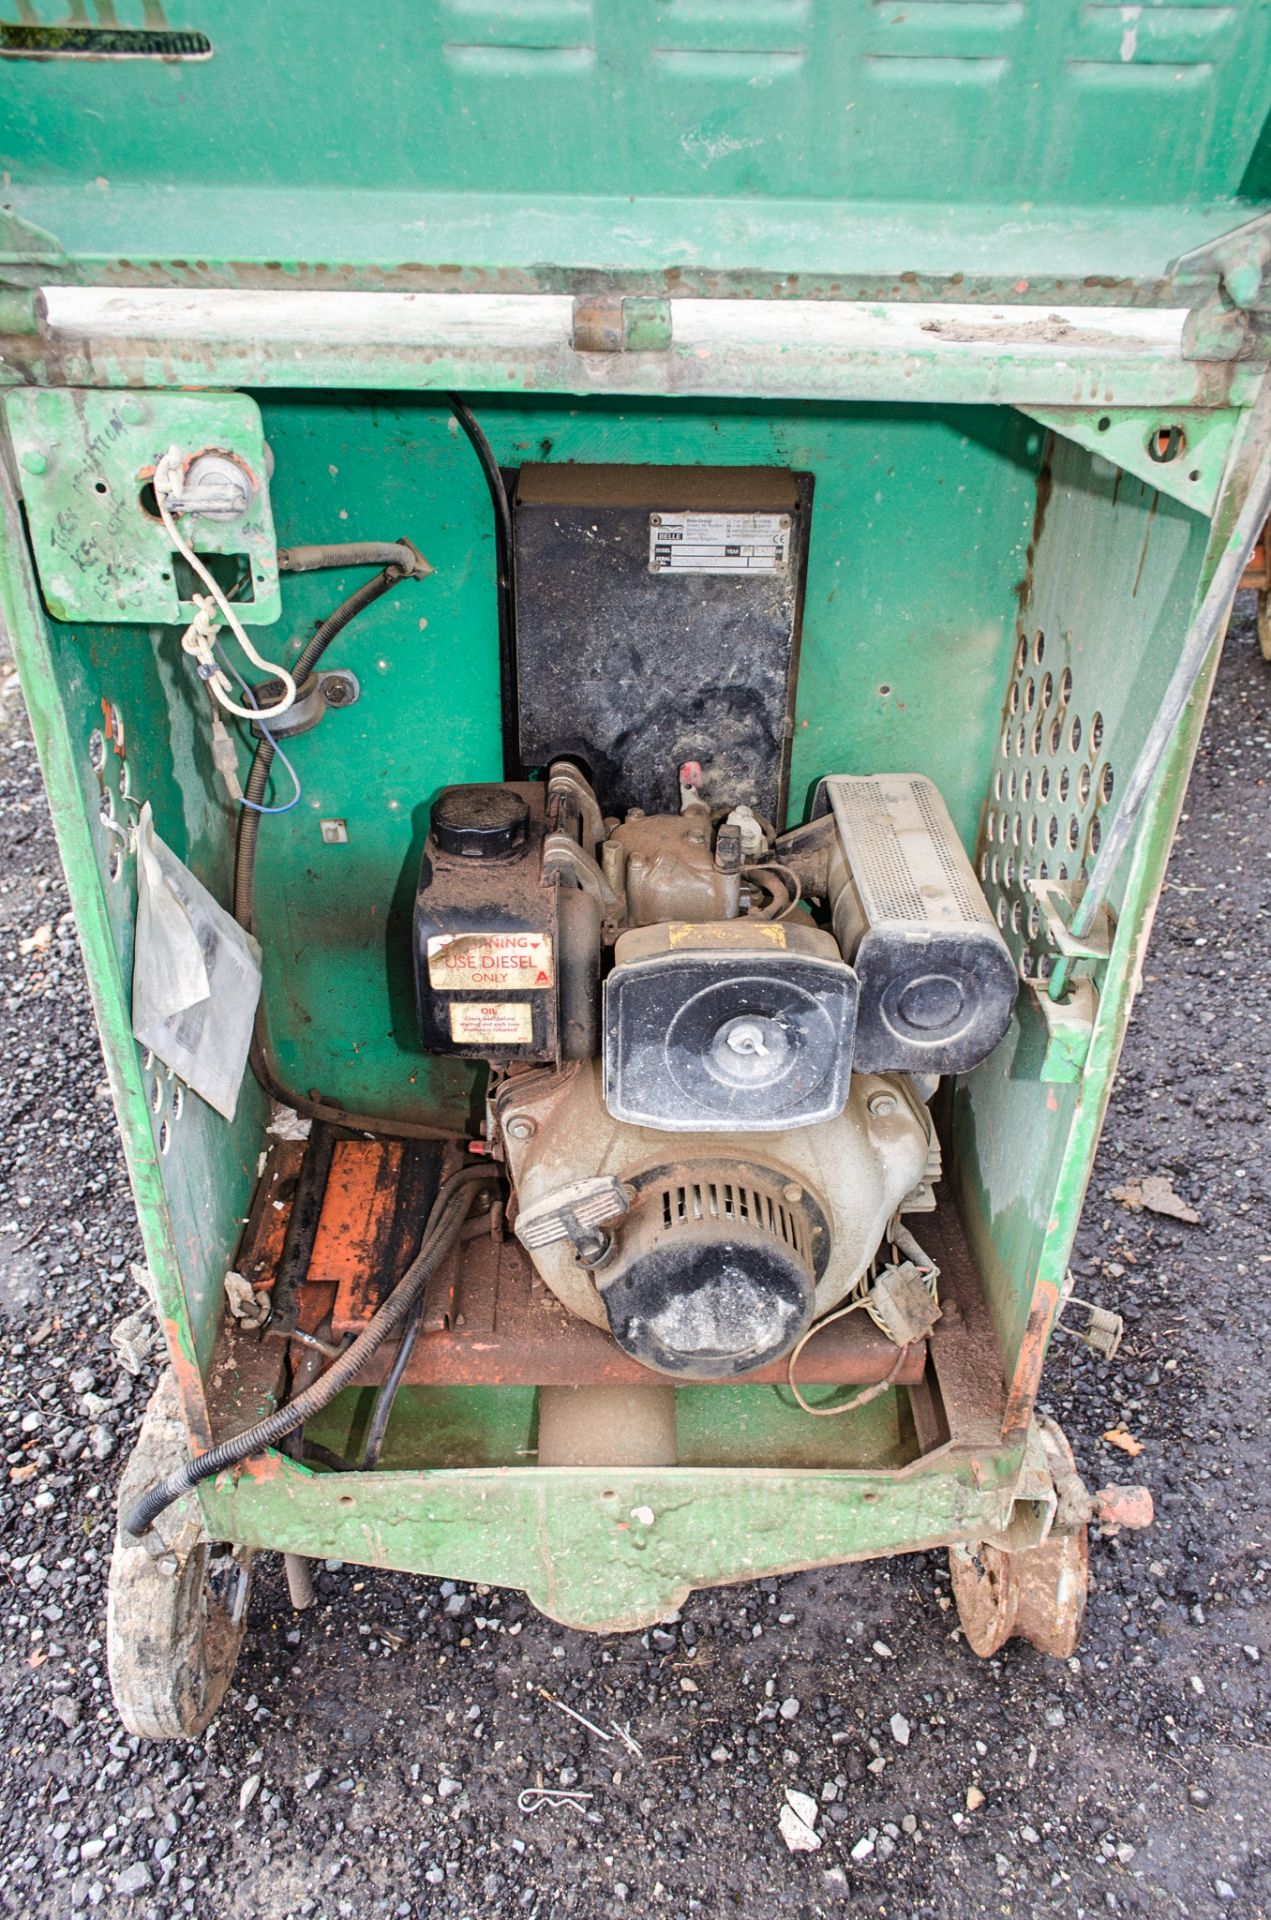 Belle PM20 diesel driven site mixer A704204 - Image 3 of 3